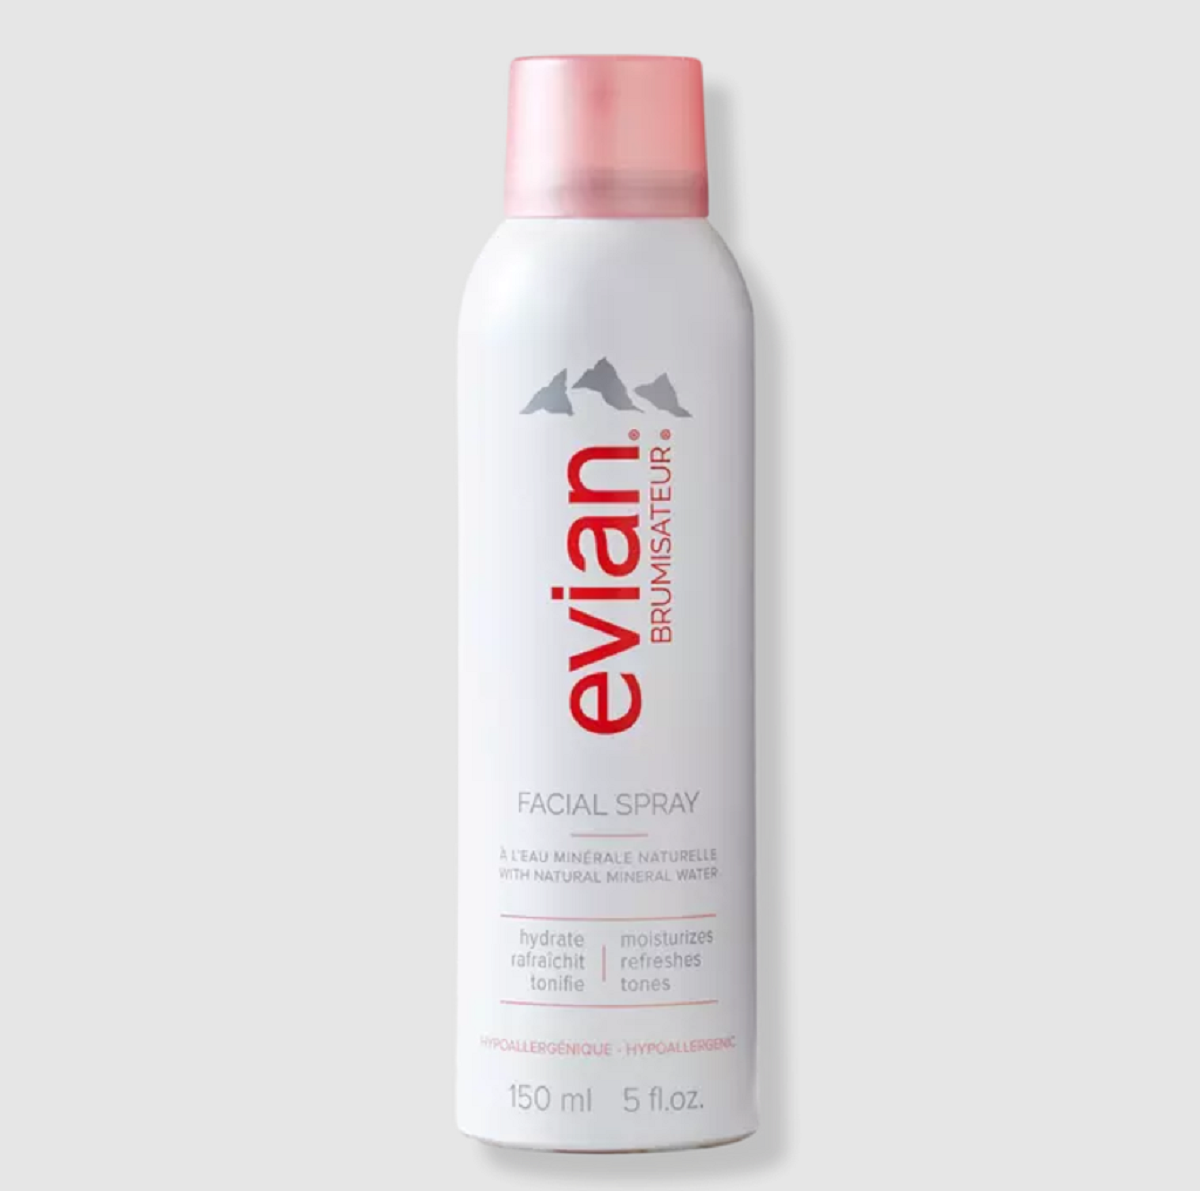 Evian Buy 1 Get 1 40% Off at Ulta Beauty